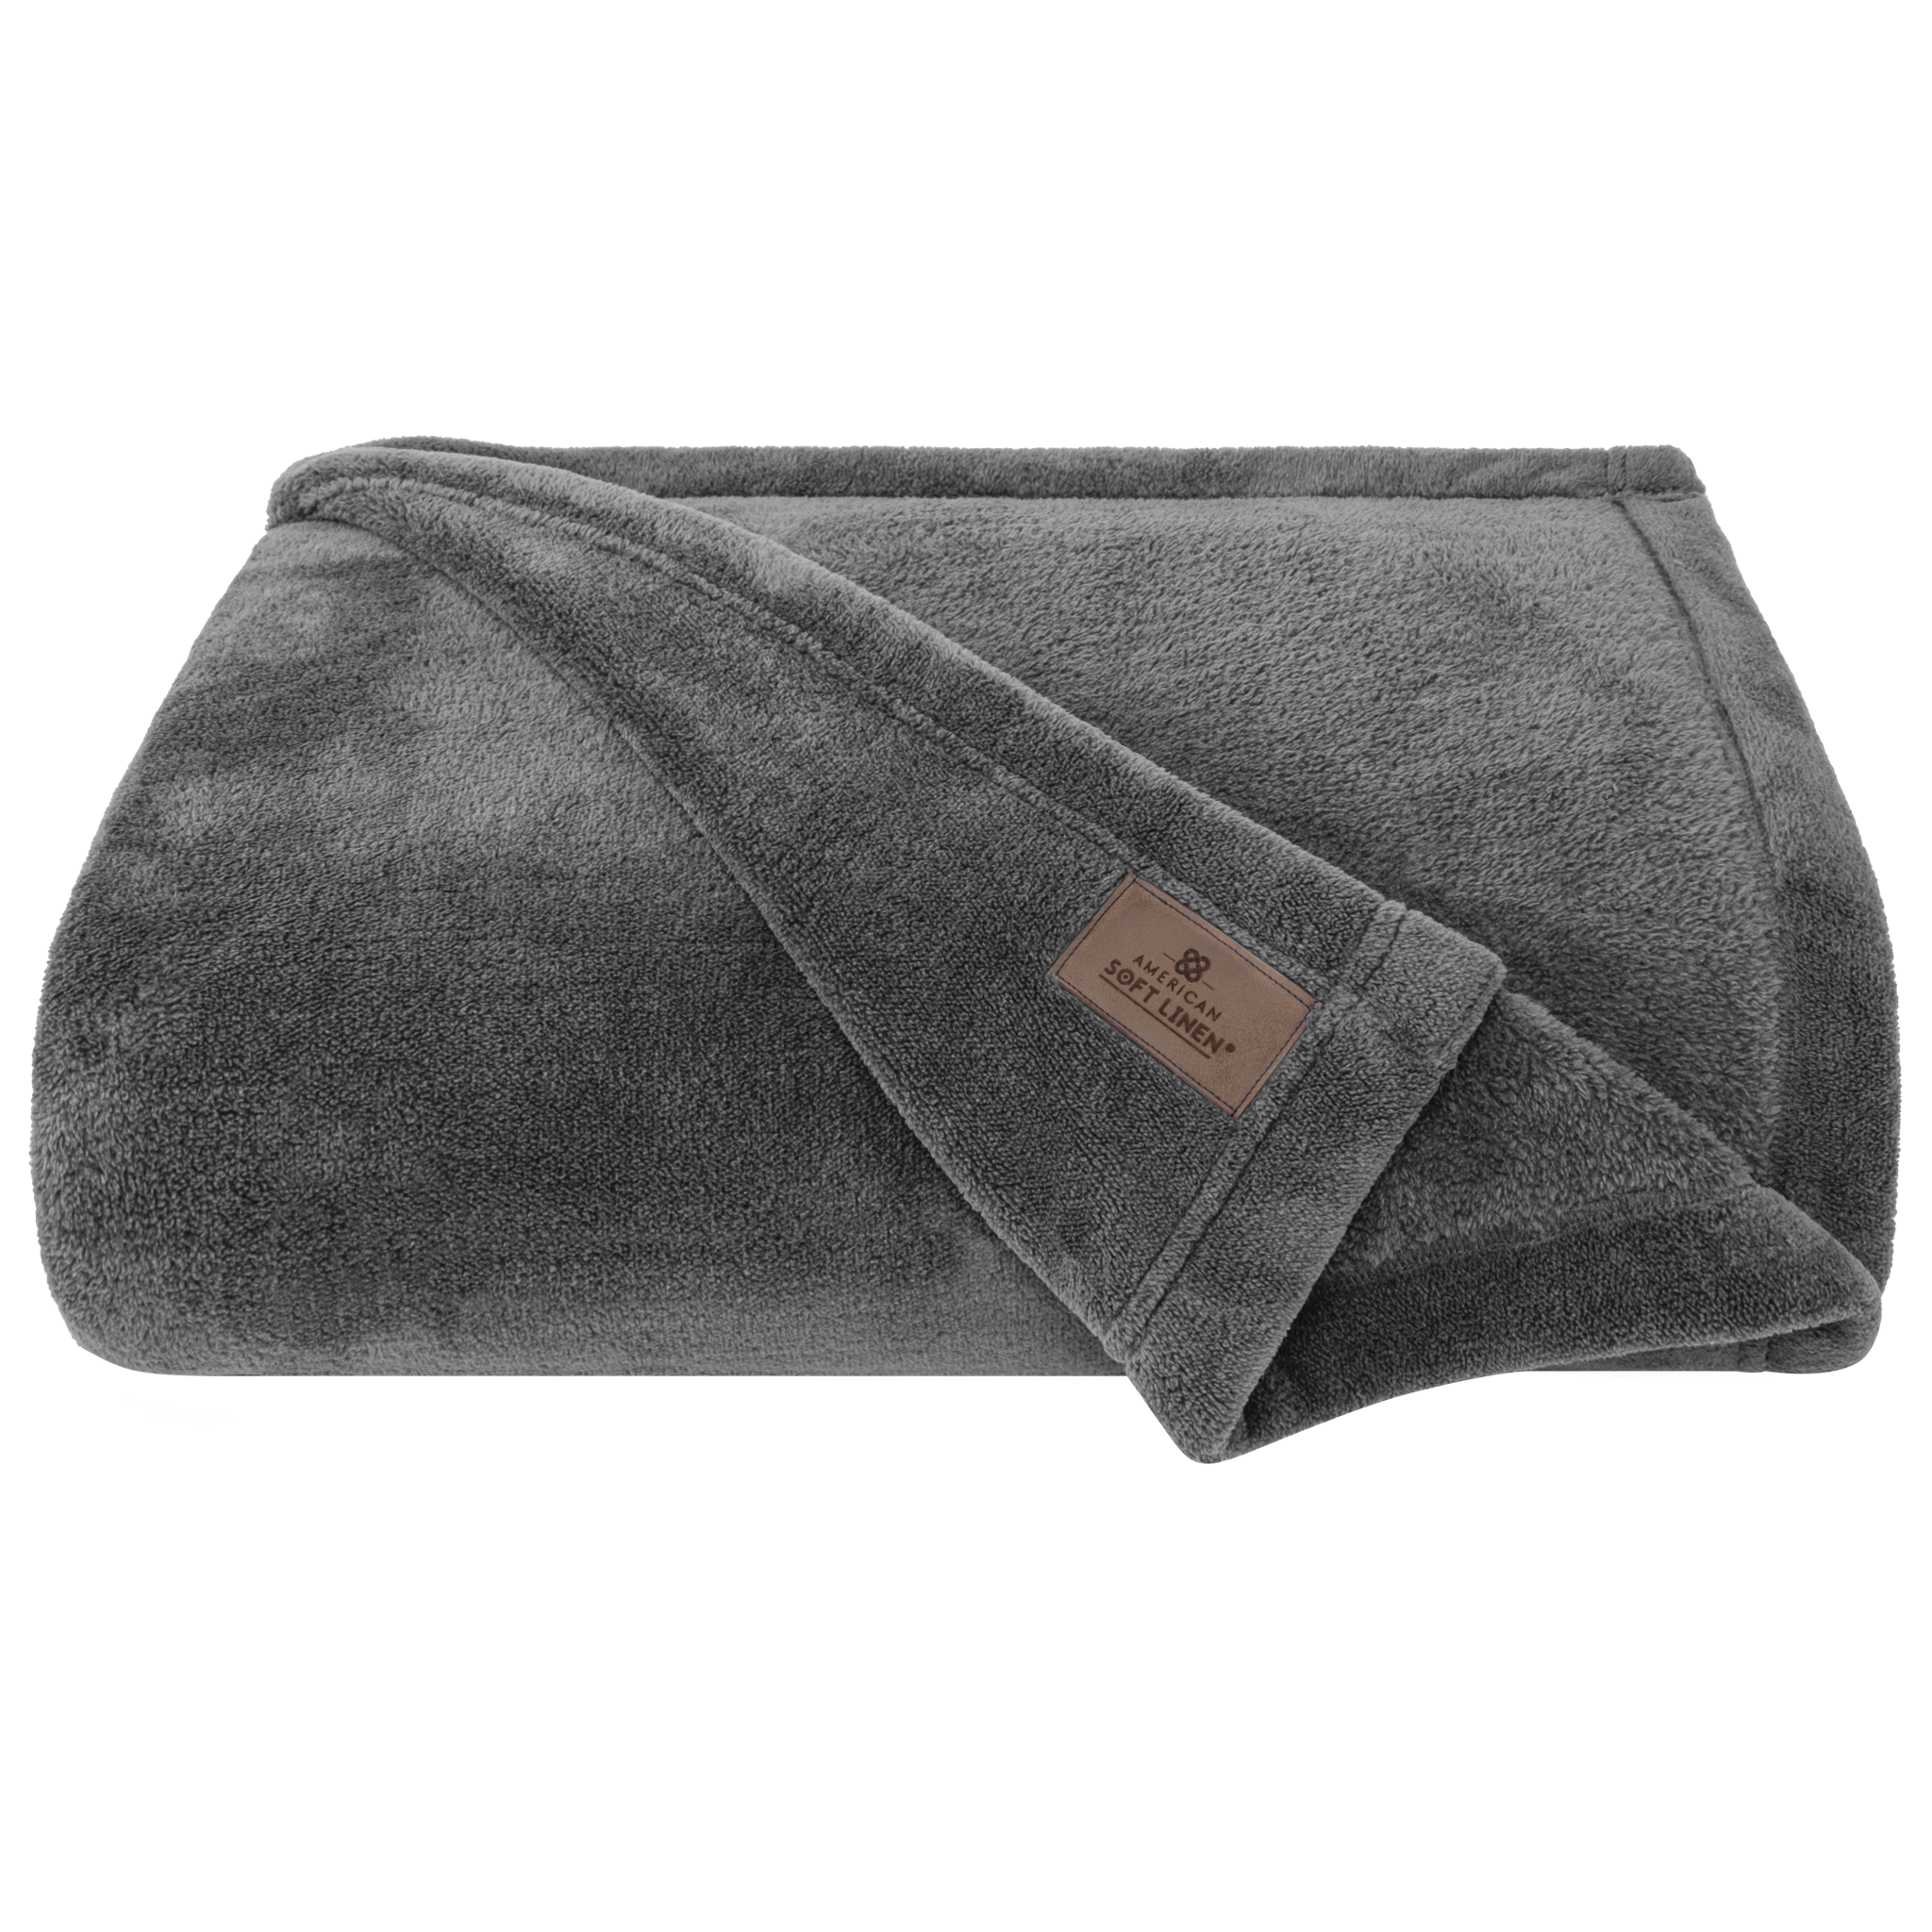 American Soft Linen - Bedding Fleece Blanket - Queen Size 85x90 inches - Gray - 3